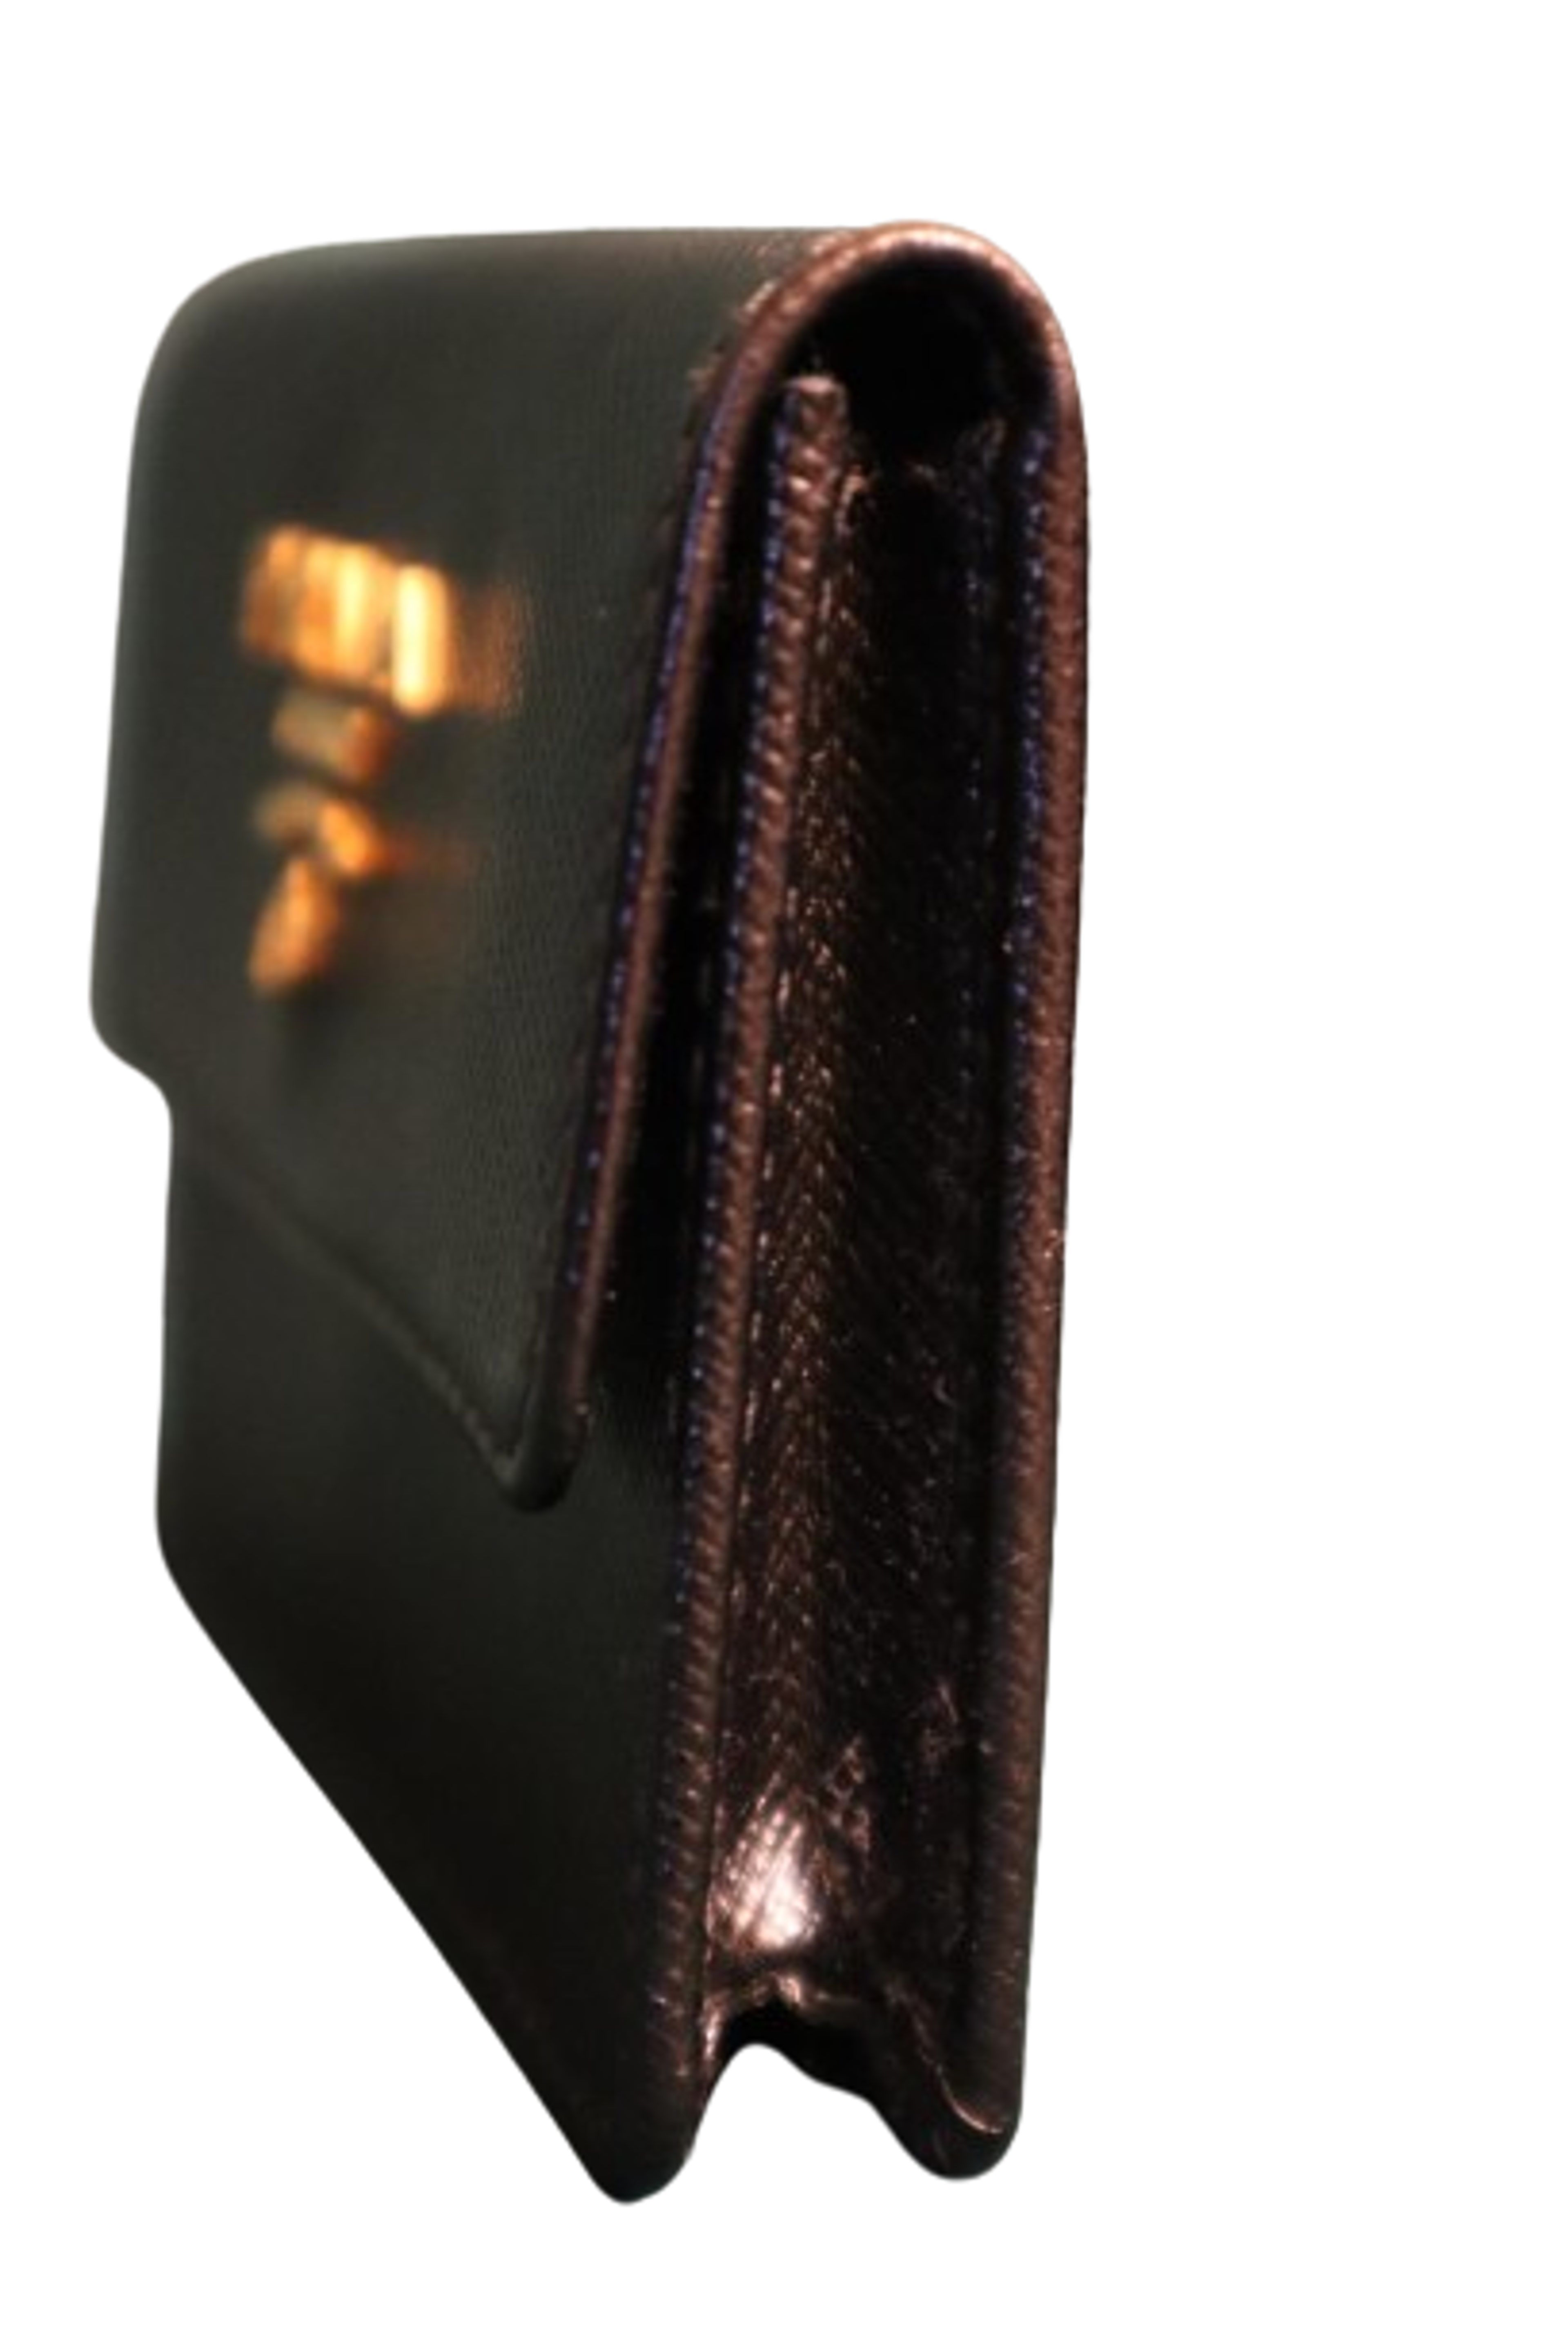 Alternate View 1 of Prada Black Saffiano Leather Flap Card Holder NEW